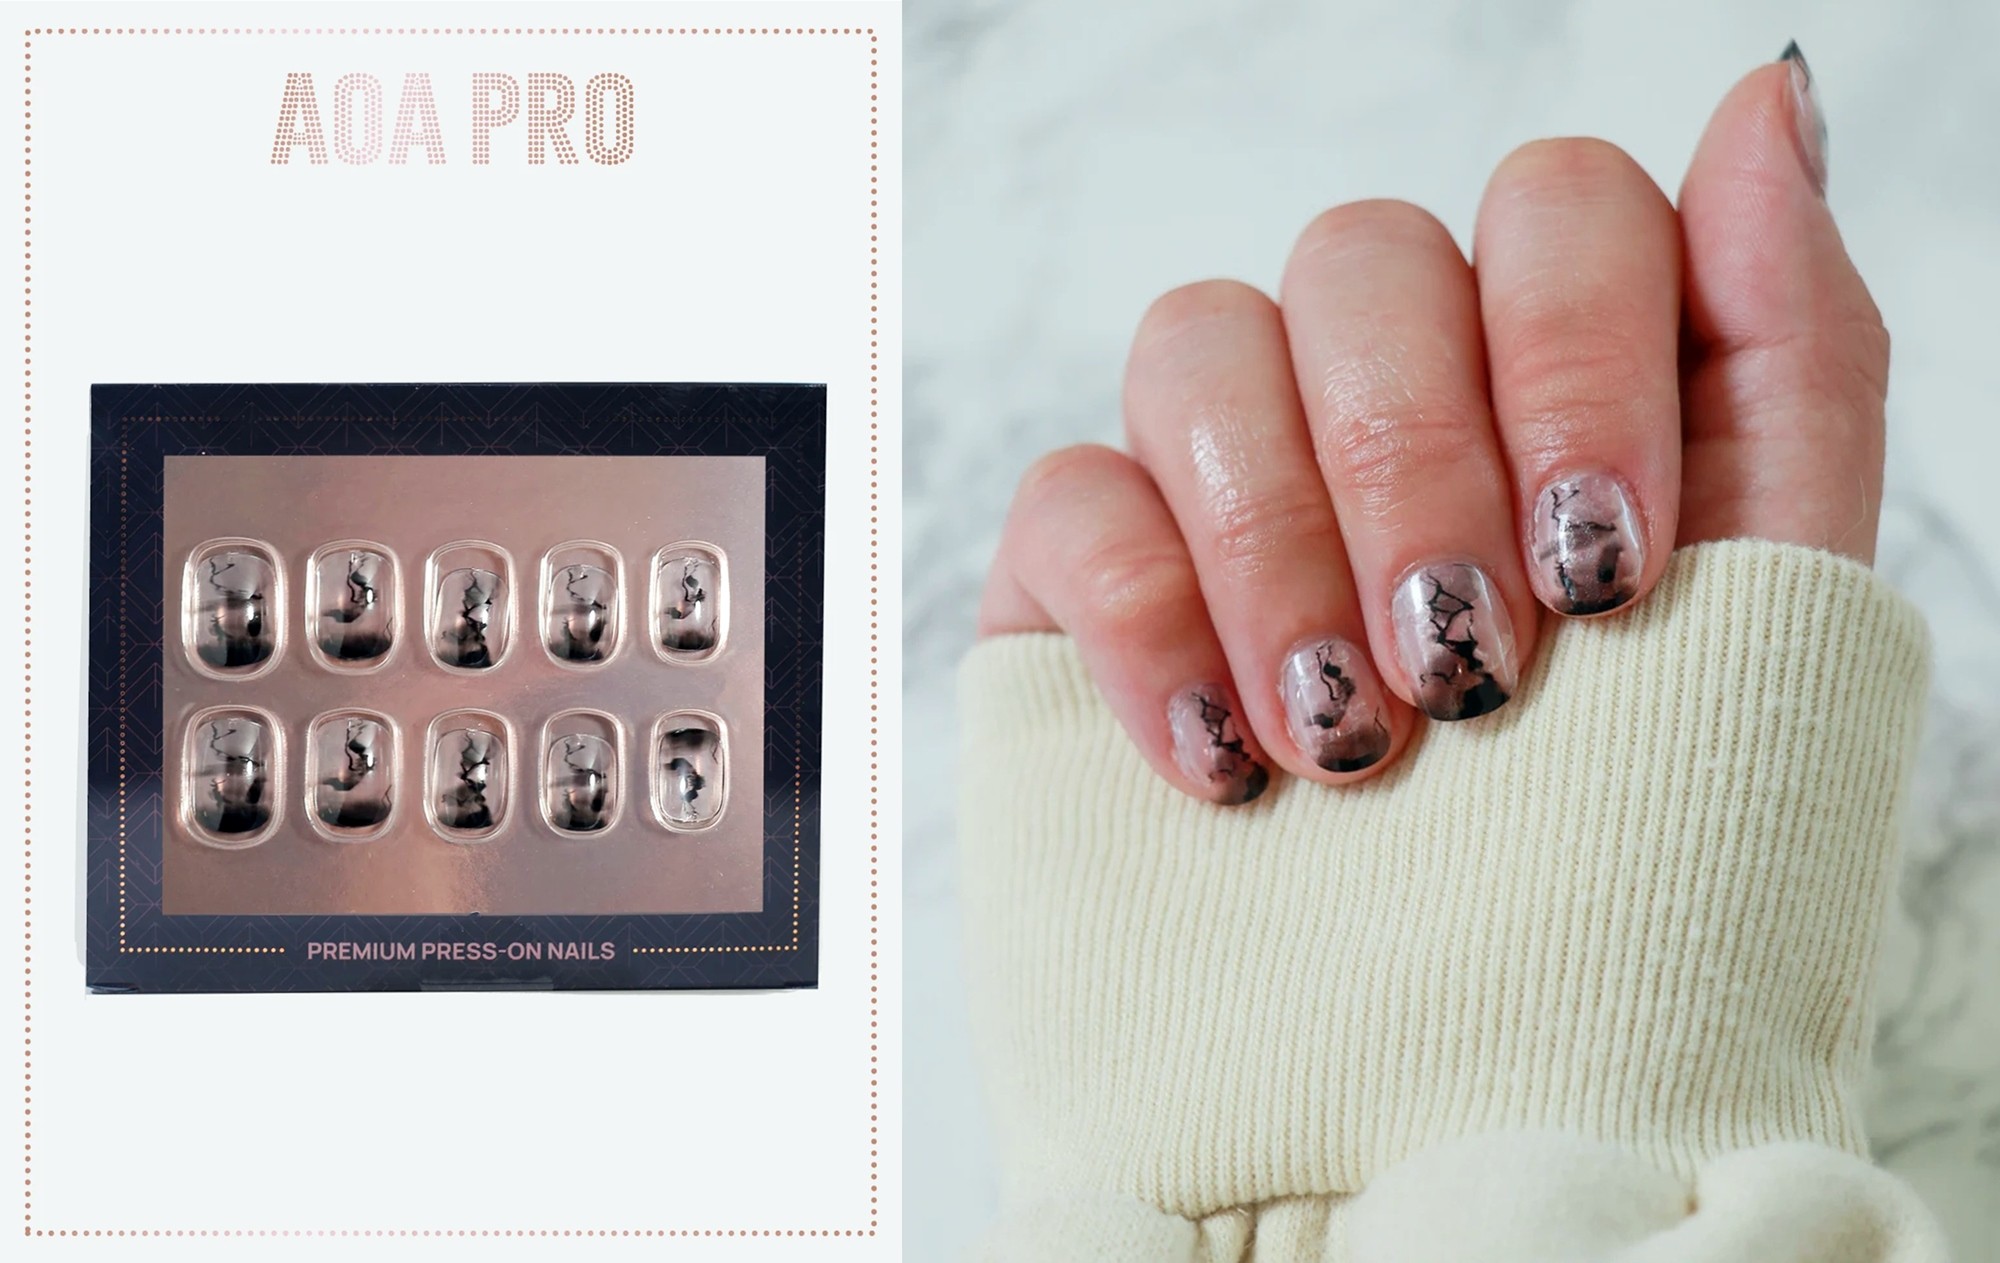 Nailed it! Miss A Introduces AOA Pro $5 Nail Art Kits